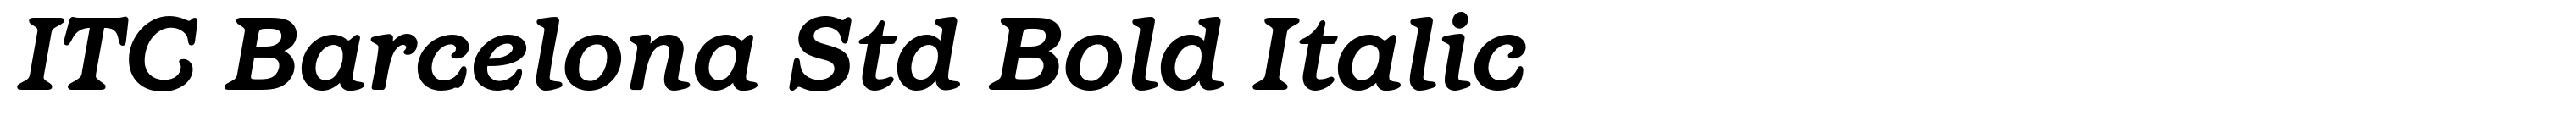 ITC Barcelona Std Bold Italic